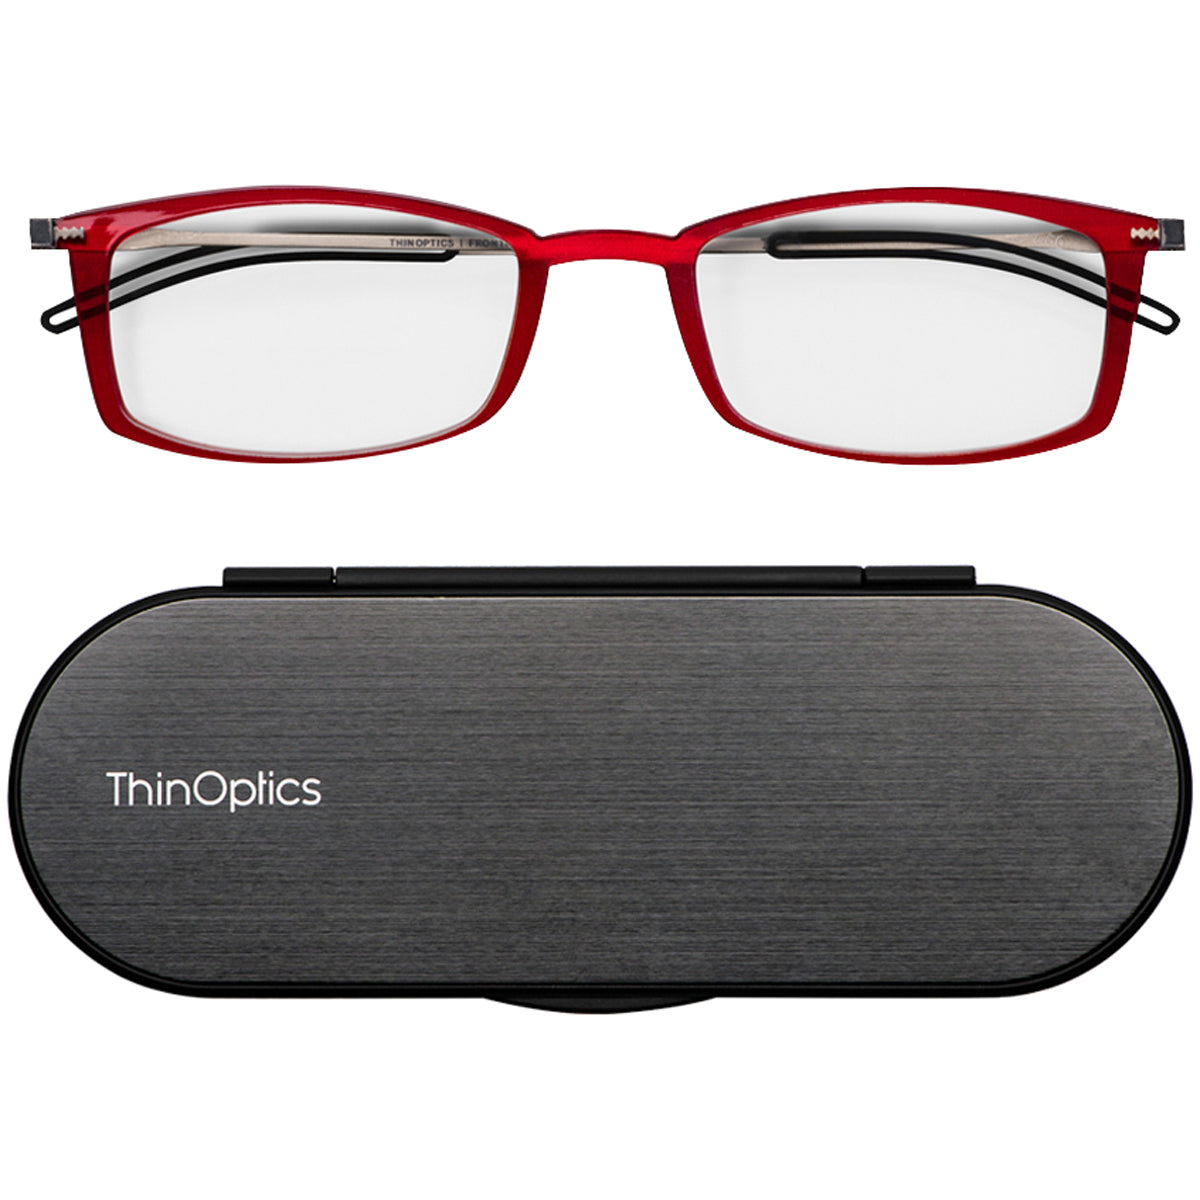 ThinOptics Reading Glasses Review 2019